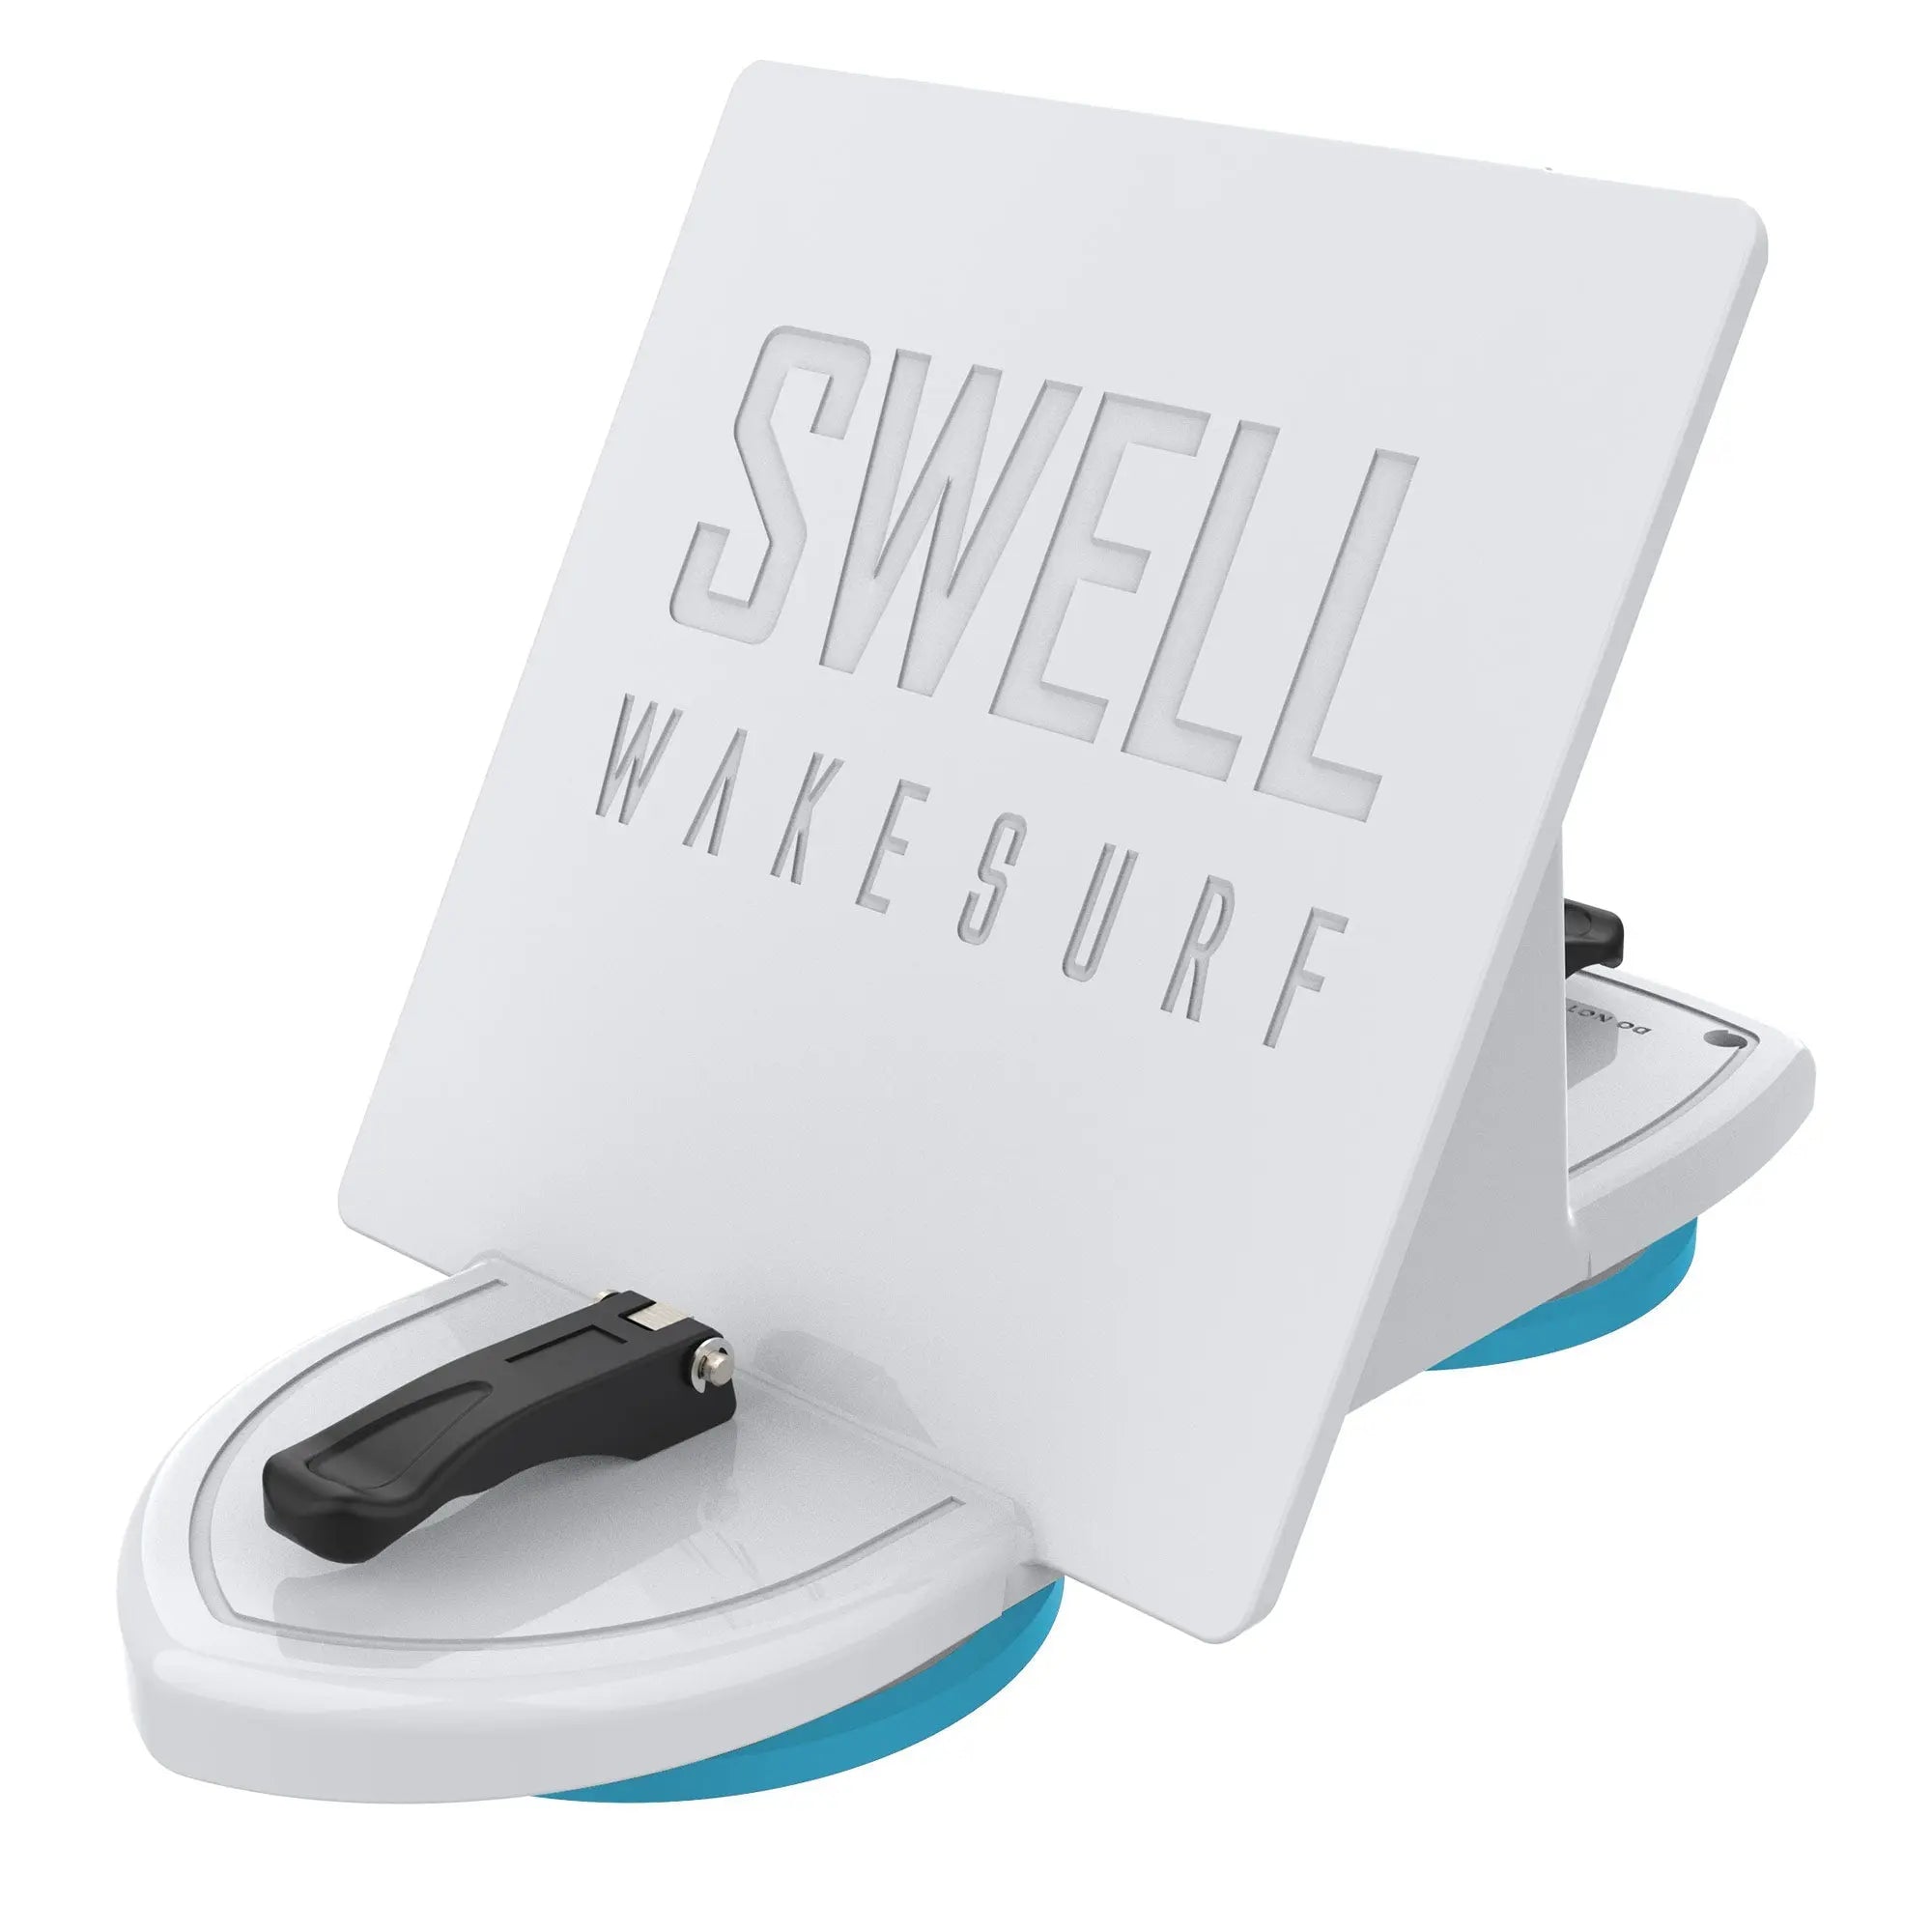 SWELL Wakesurf Creators - Used Units - 2.0, H3X, & Slim SWELL Wakesurf